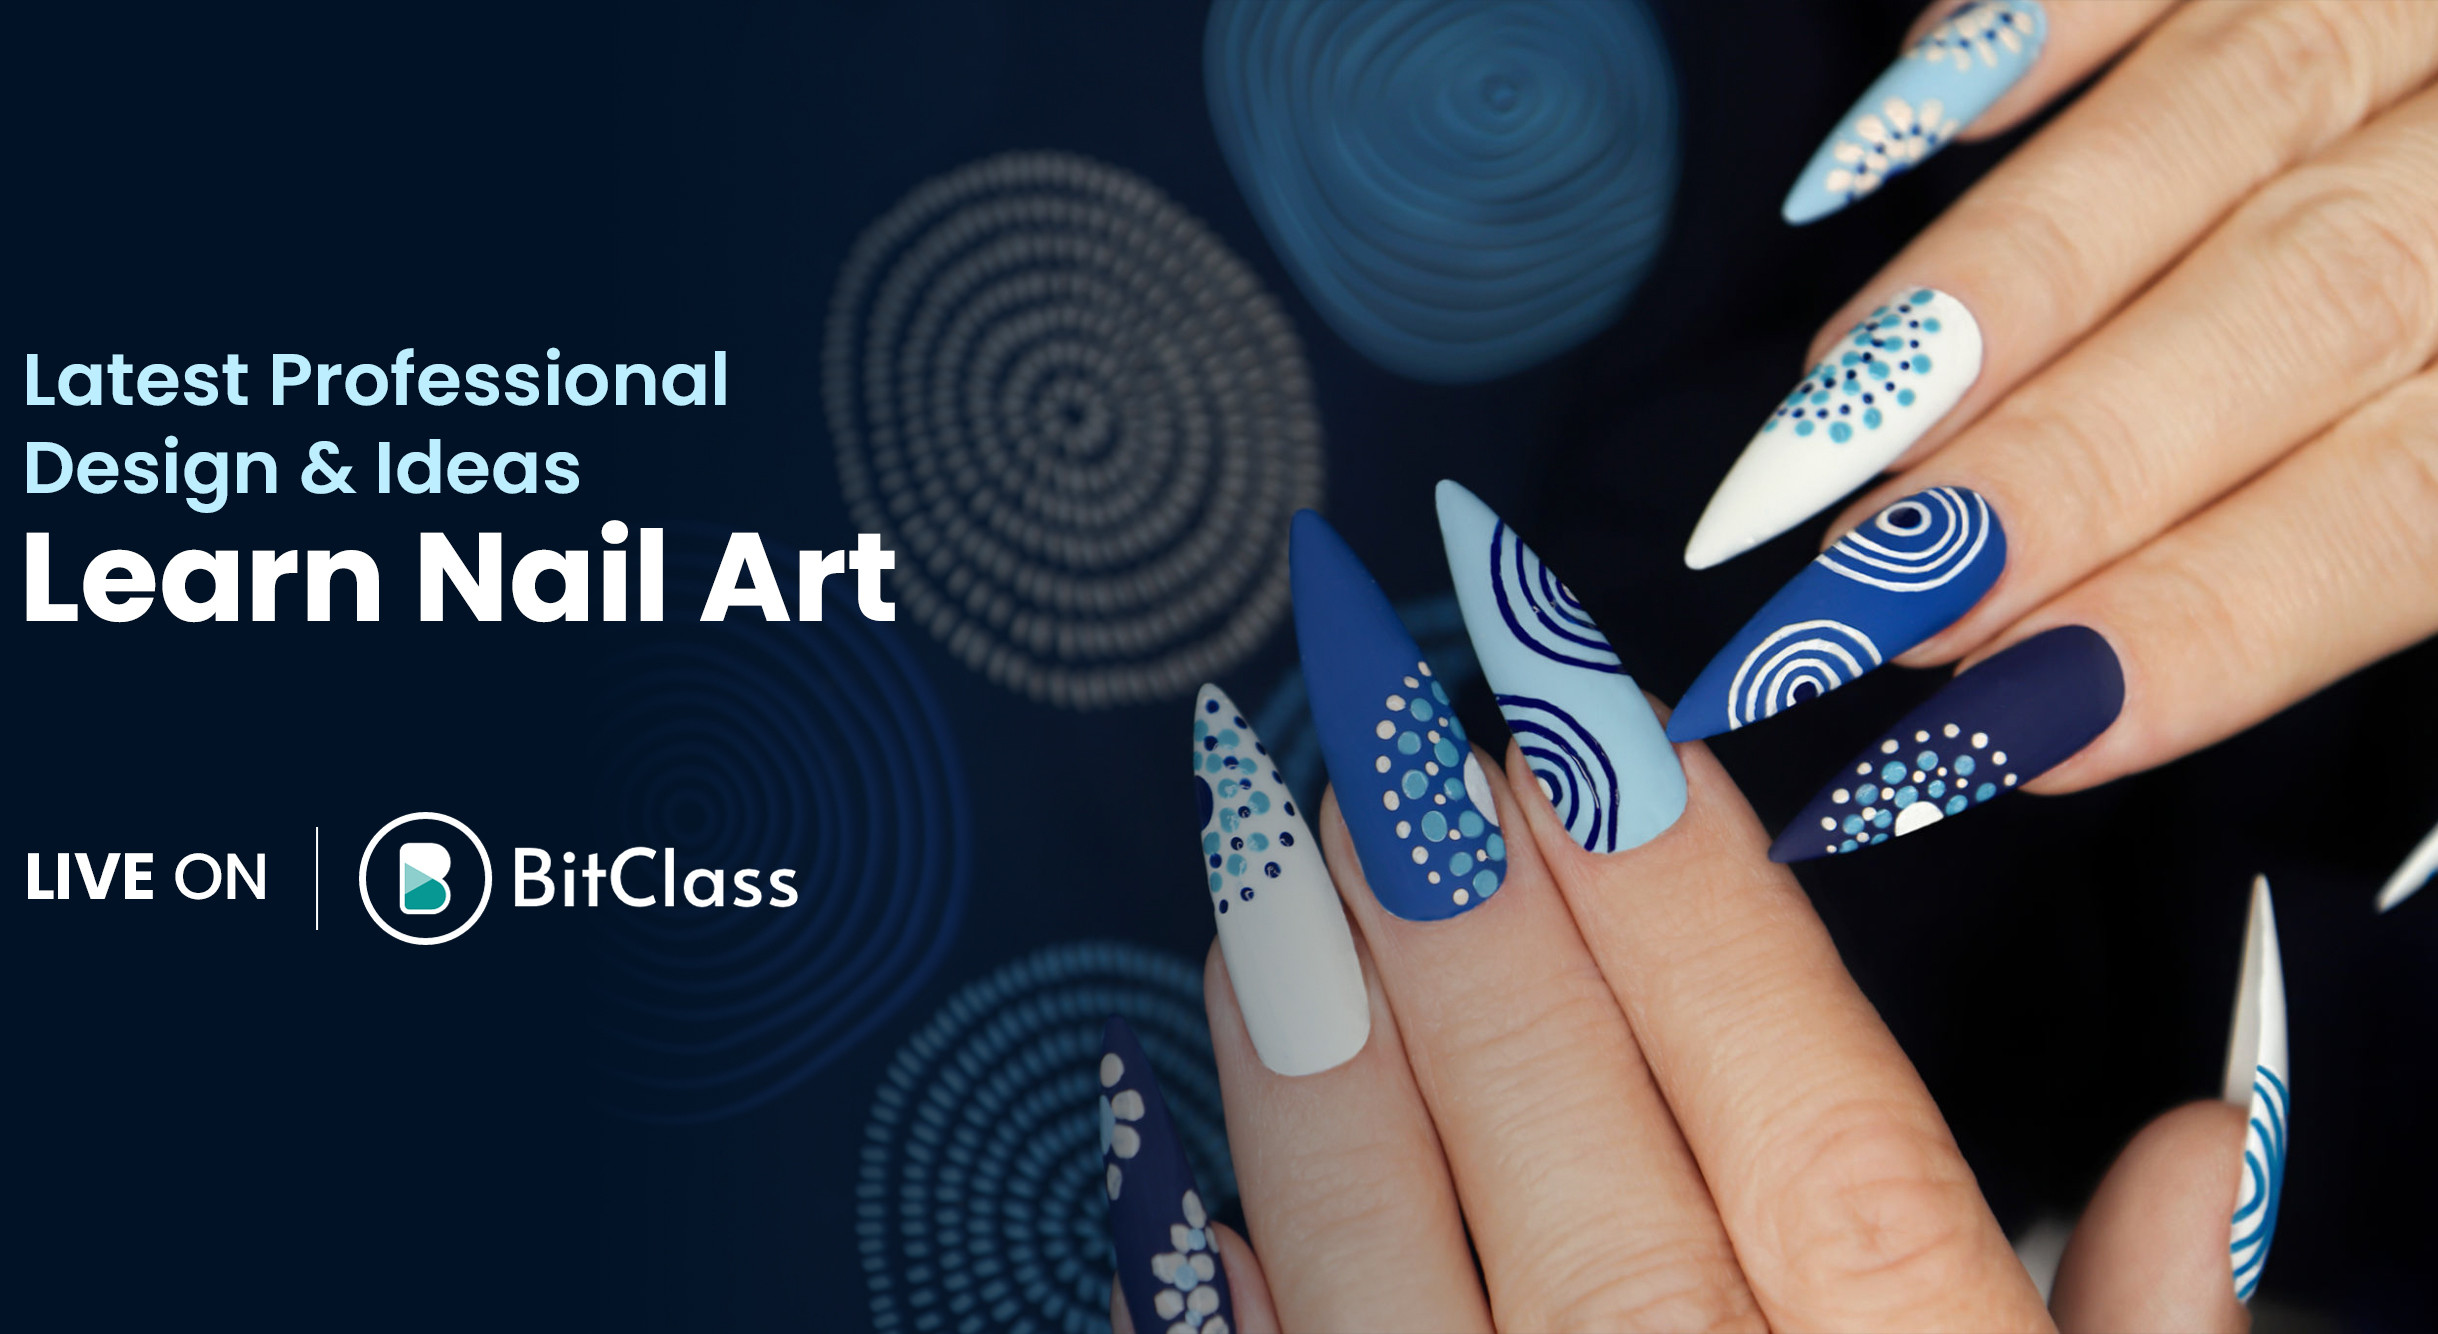 NAIL ART COURSES - Why should someone consider taking a Nail Art Courses? -  oranehyderabad